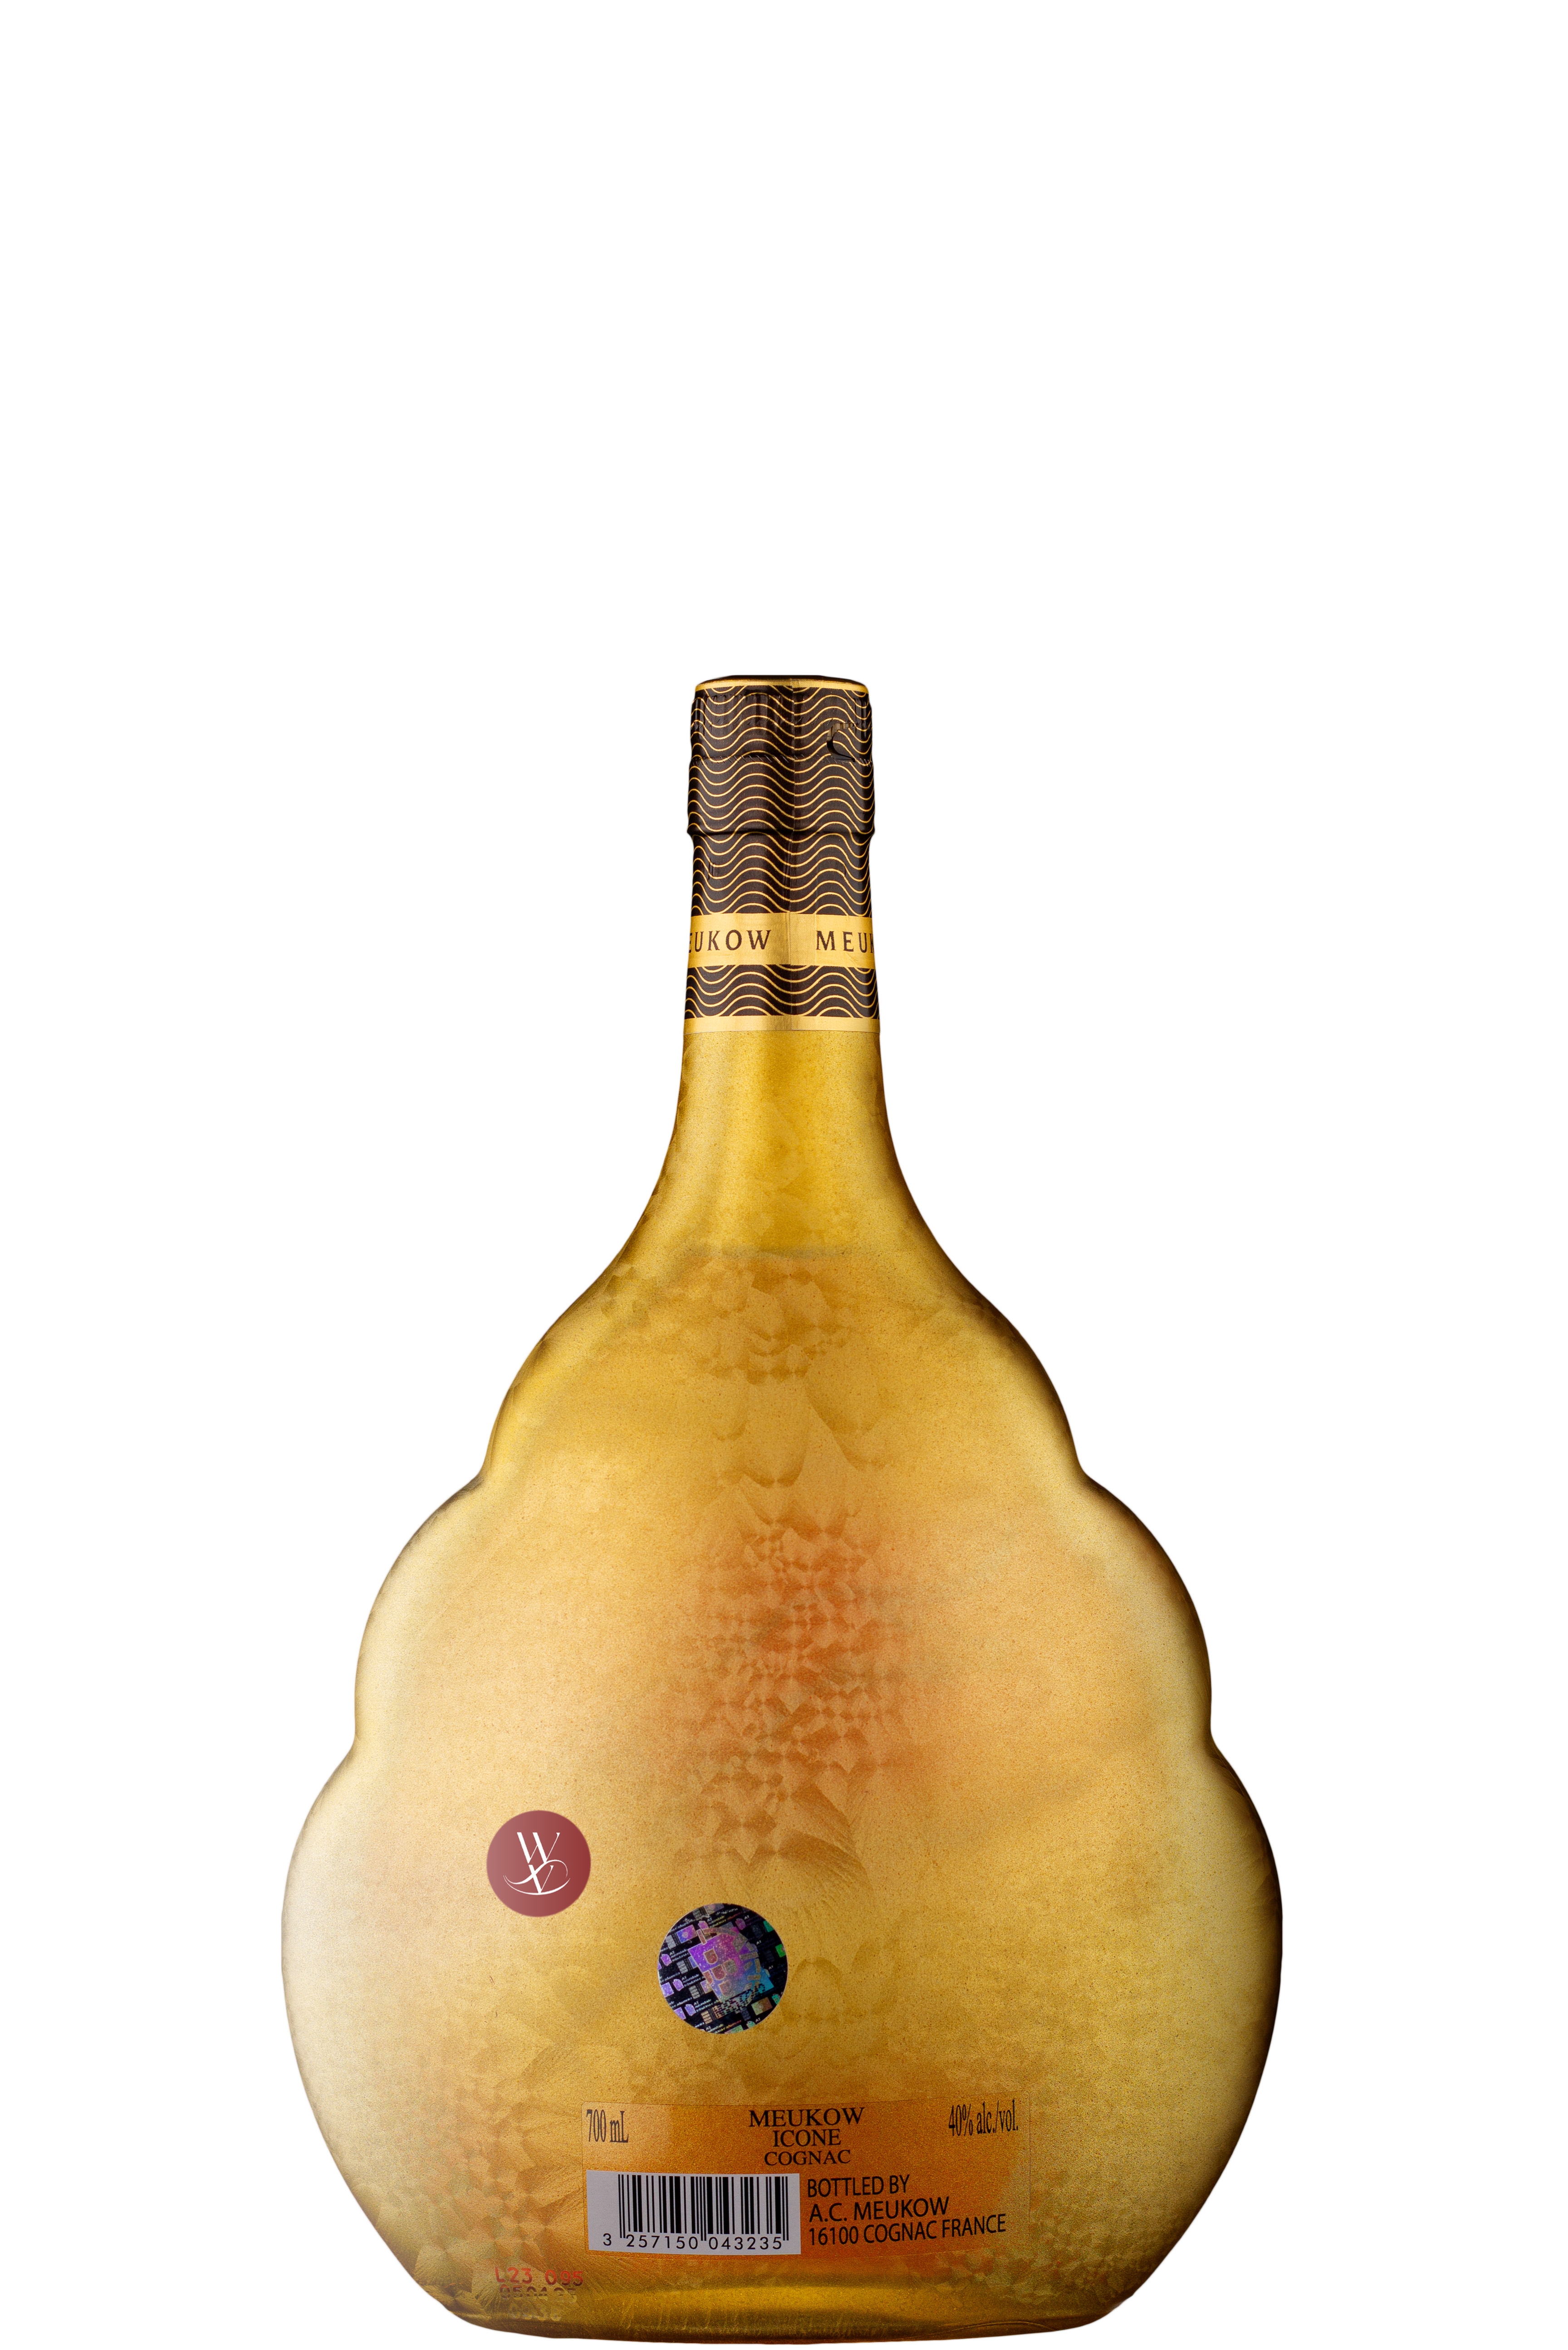 WineVins Cognac Meukow Icone GB